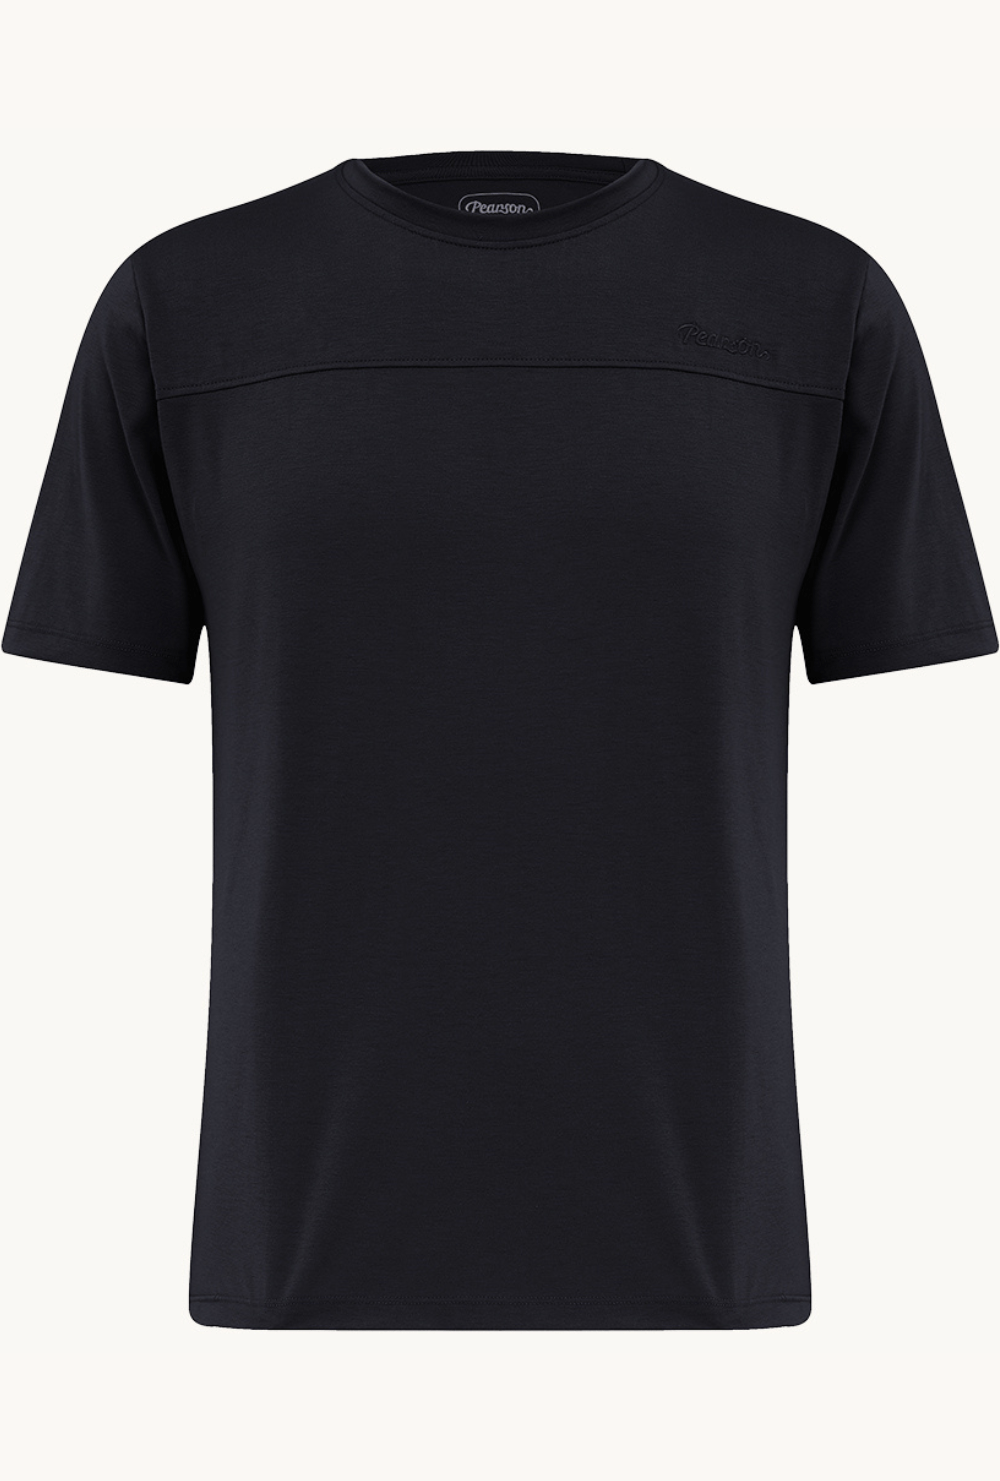 Pearson 1860  High DaysandHolidays - Cycling T-shirt  Black / Medium